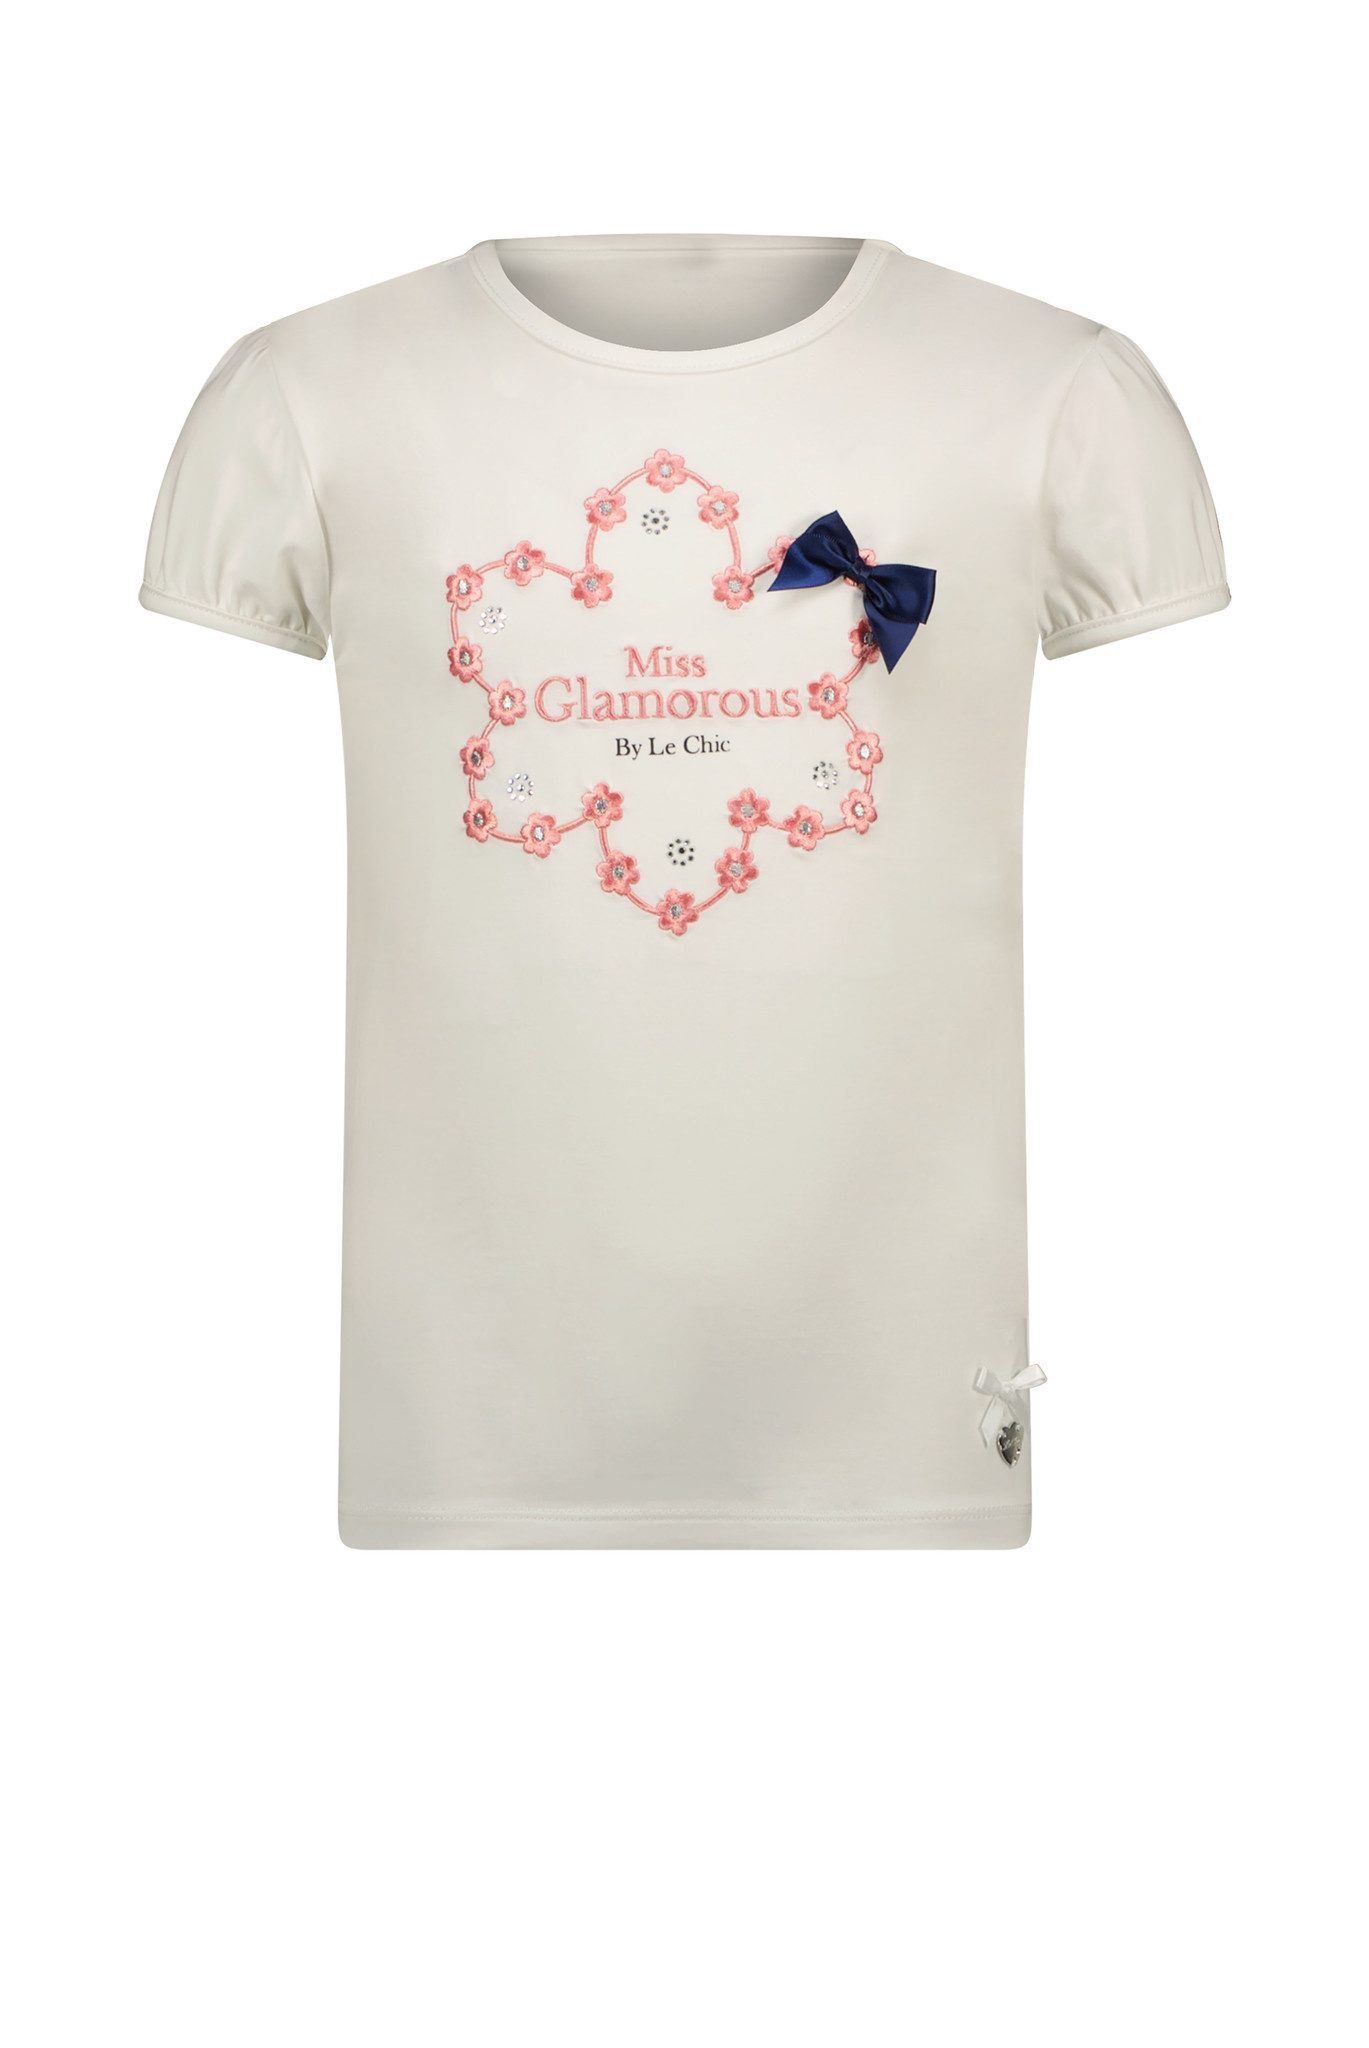 Le Chic Meisjes t-shirt glamorous - Nommy - Wit